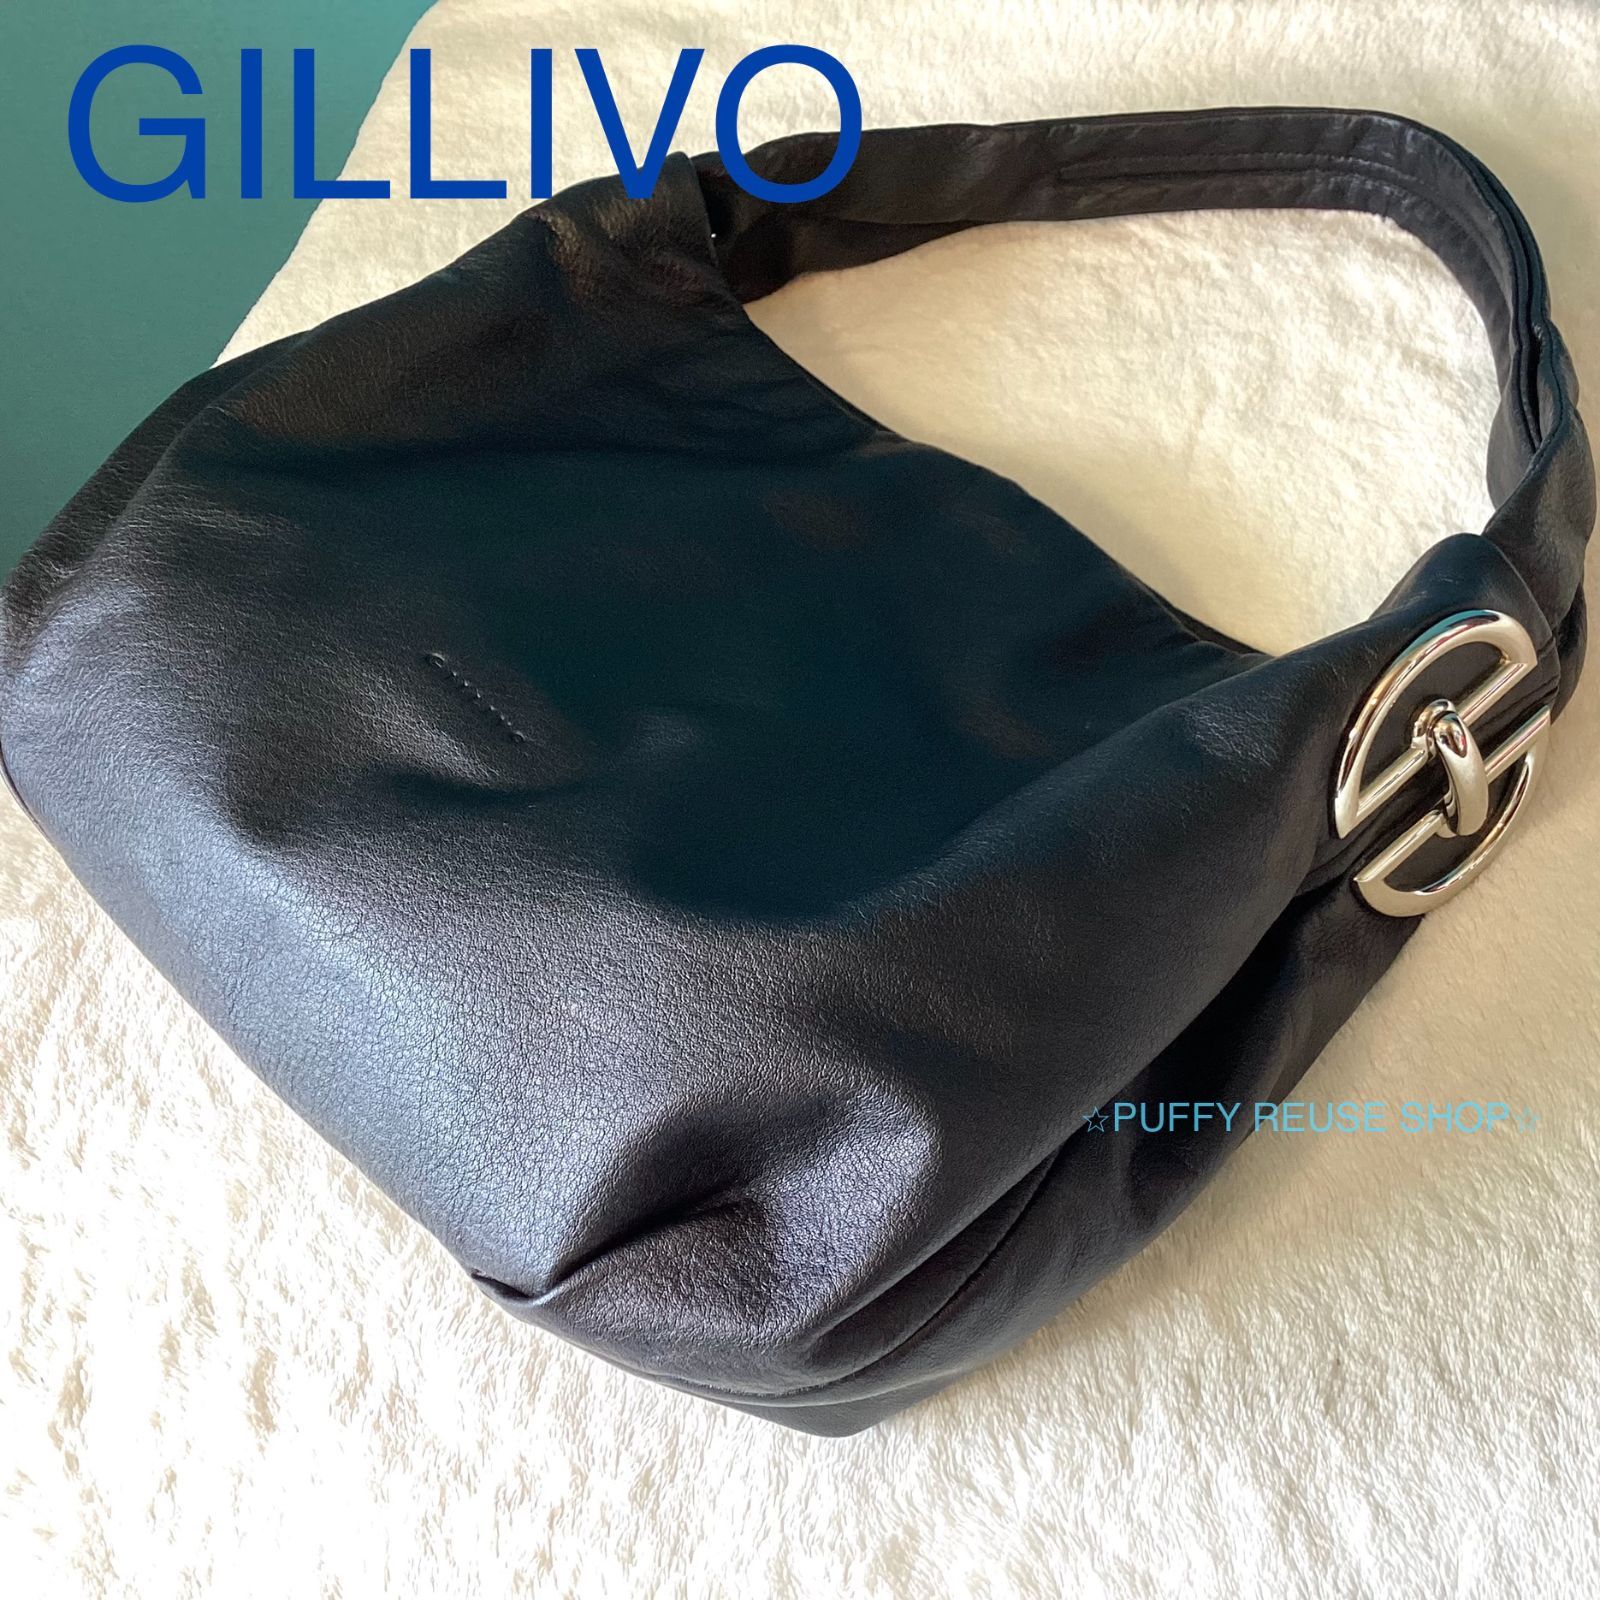 GILLIVOのバック - バッグ